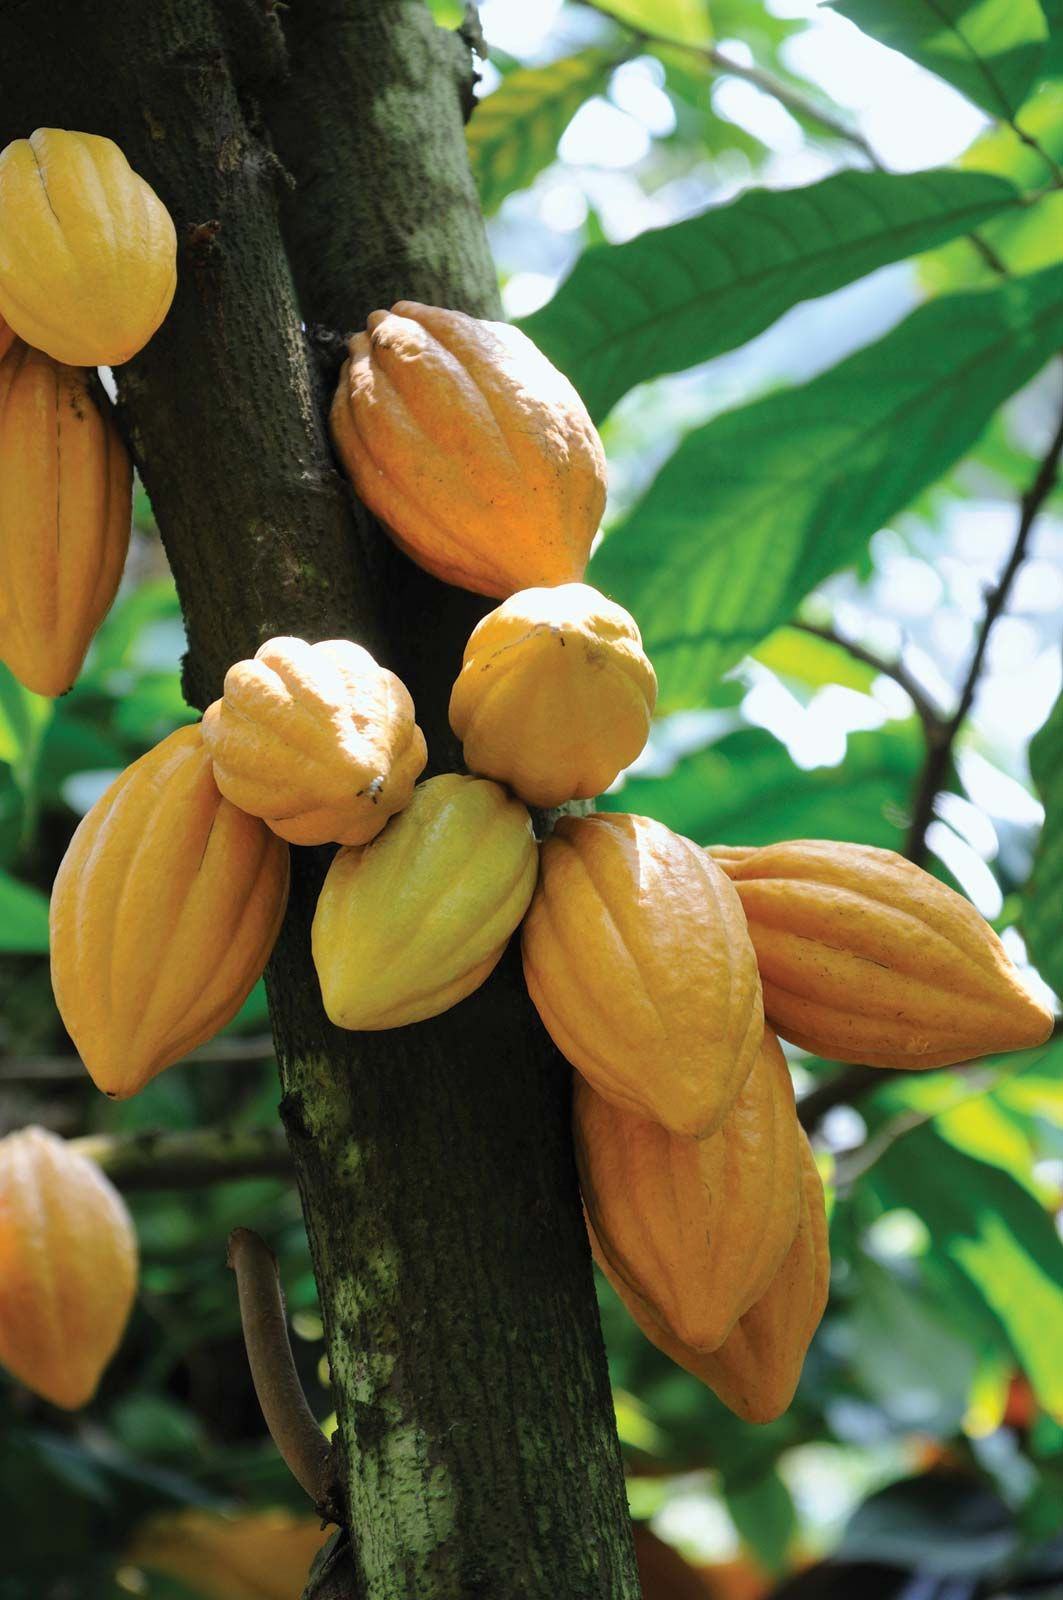 Cacao | Description, Cultivation, Pests, & Diseases | Britannica